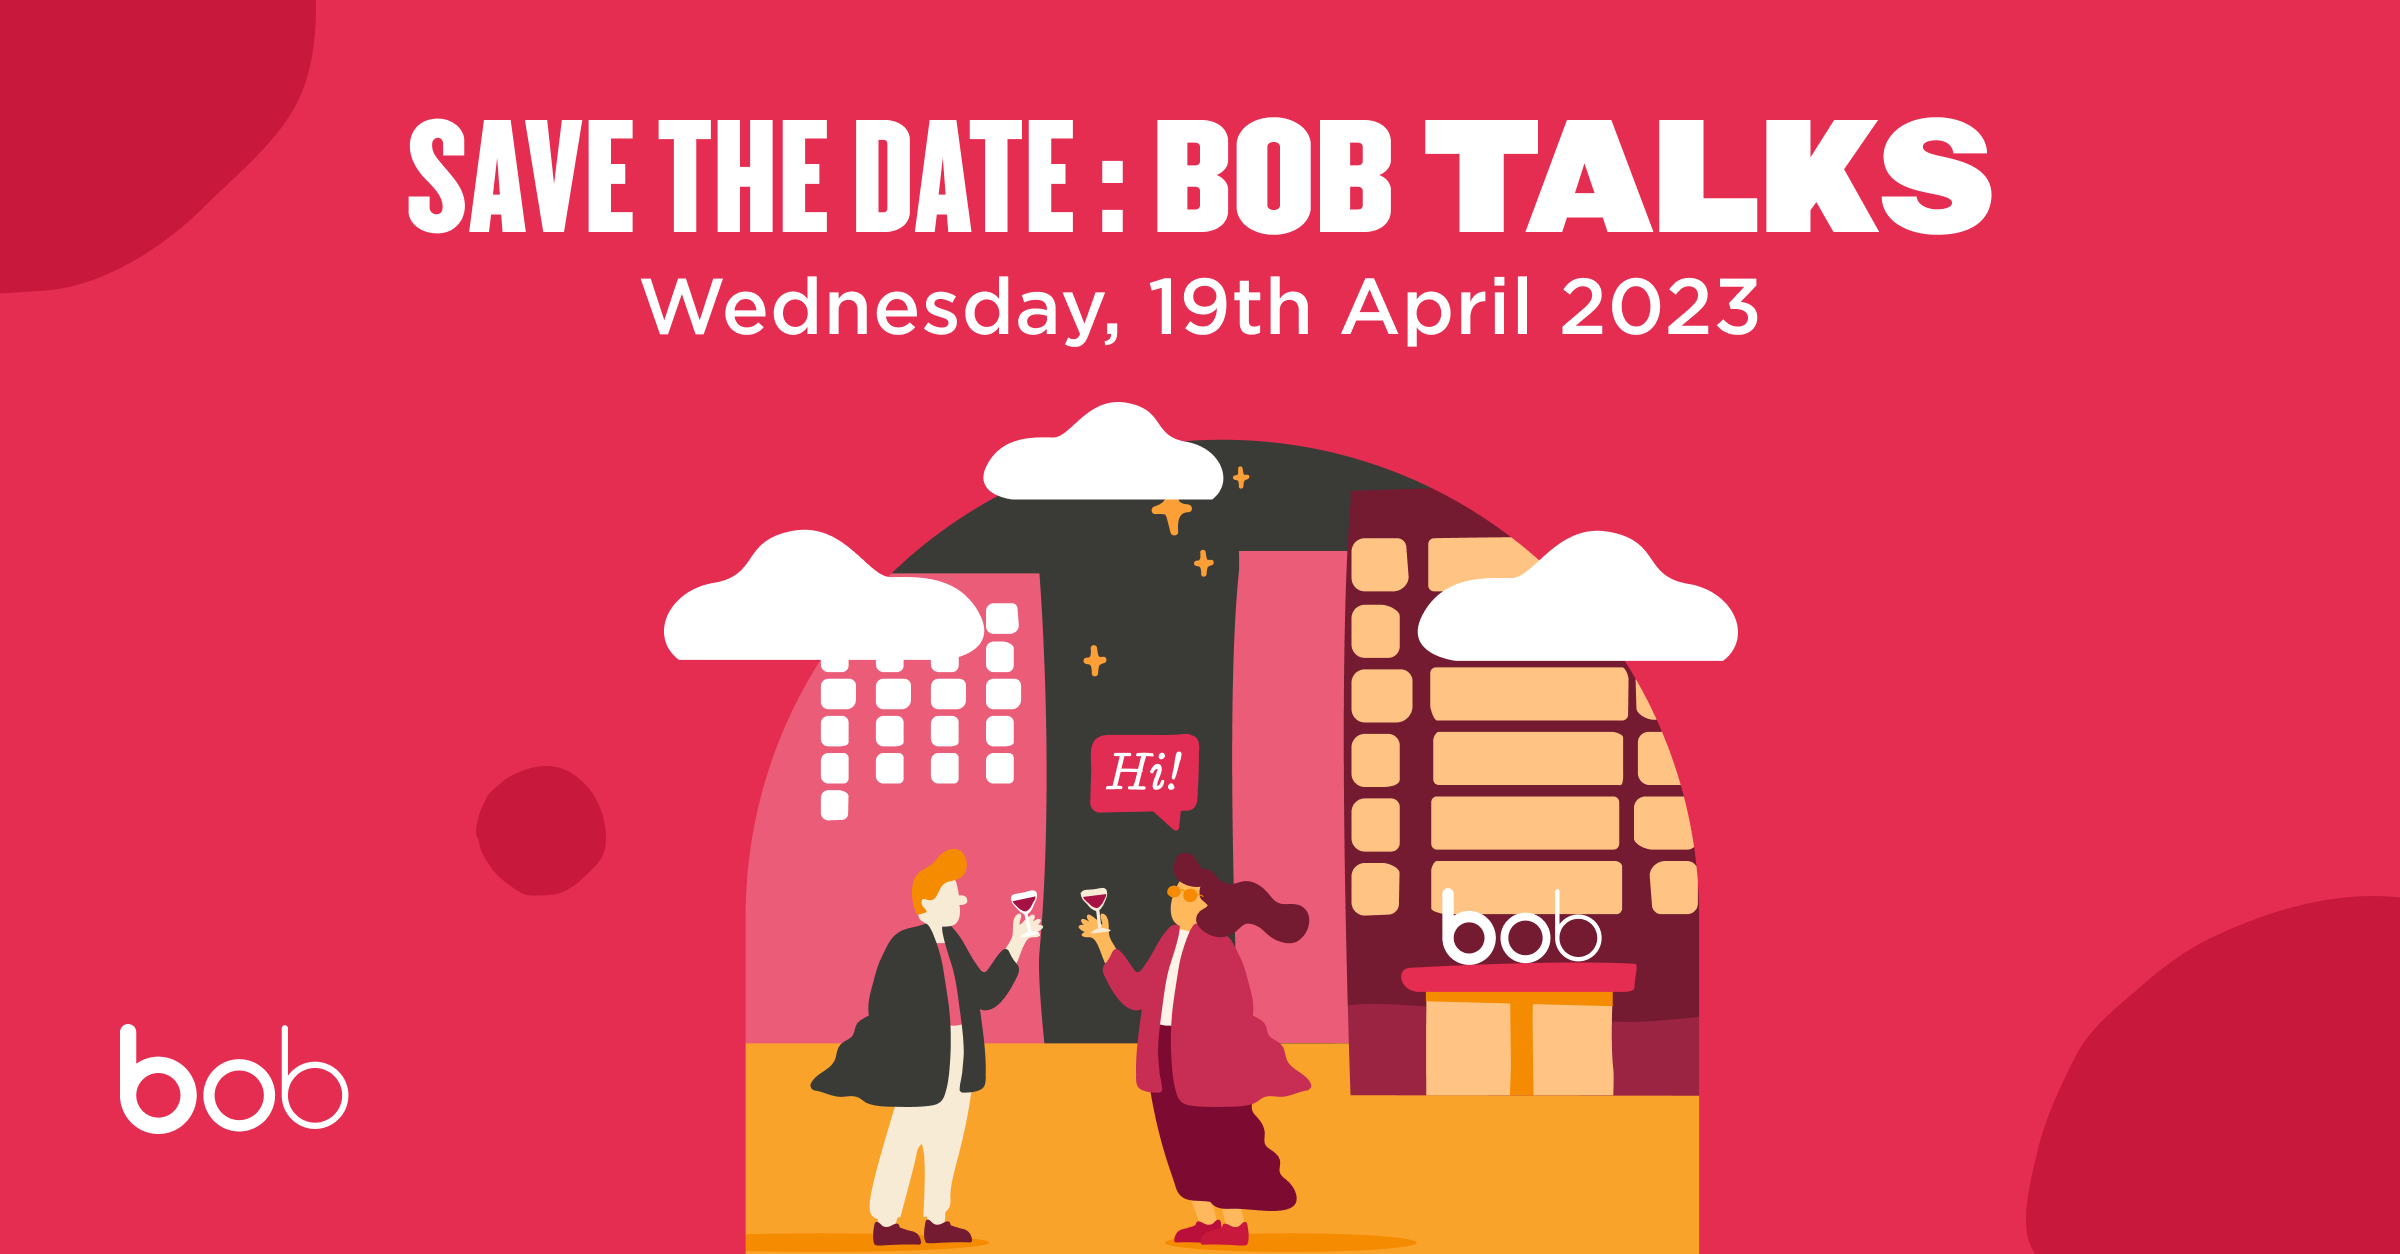 Save the Date – Bob Talks - BOBTALKS_3_organic_social_save-the-date_1200X627PX-1.png